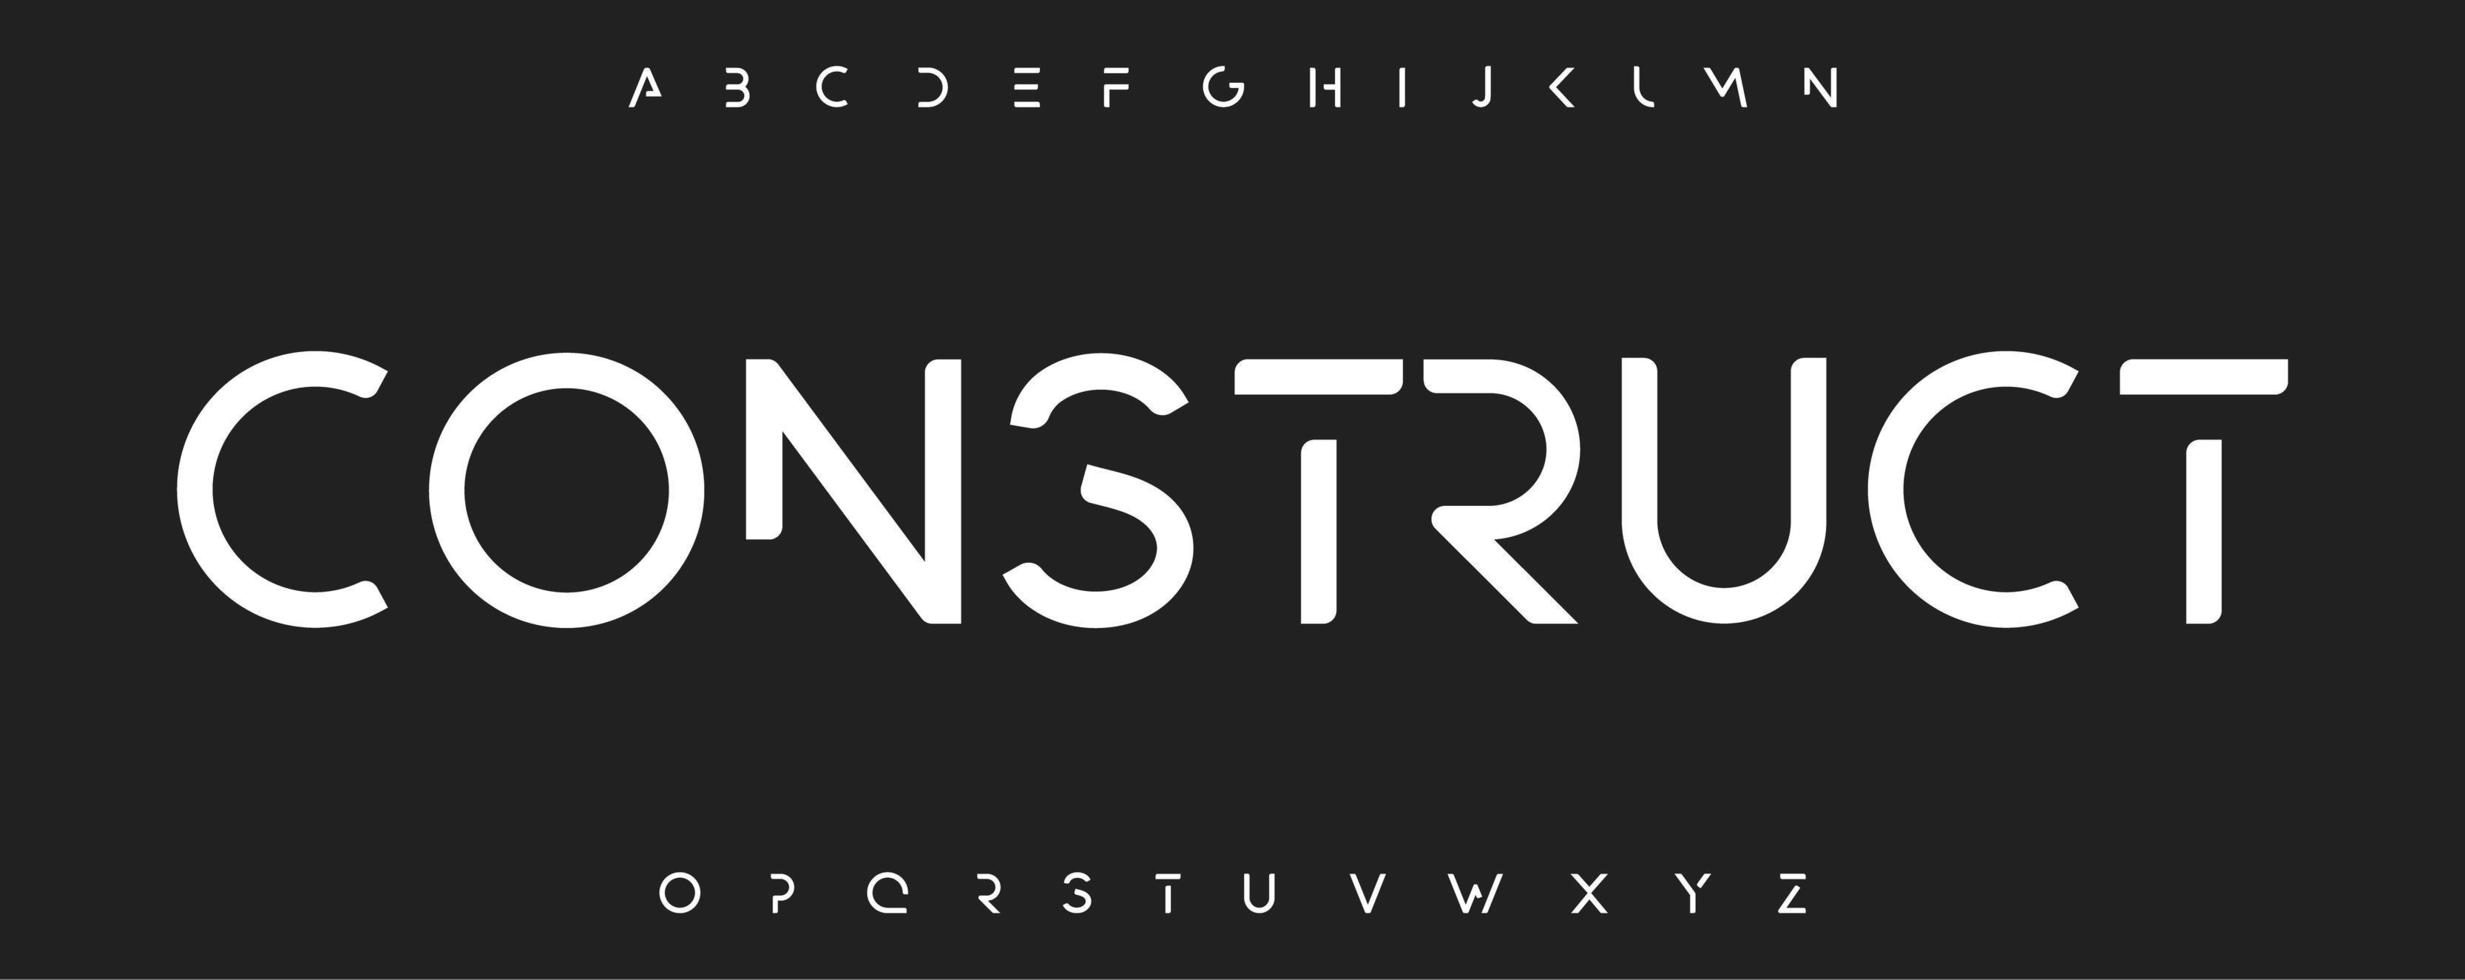 Futurism alphabet bevel font minimalistic letters for modern futuristm, sport, science logo and monogram, headline, branding typography, apparel and merchandise. Vector typographic design